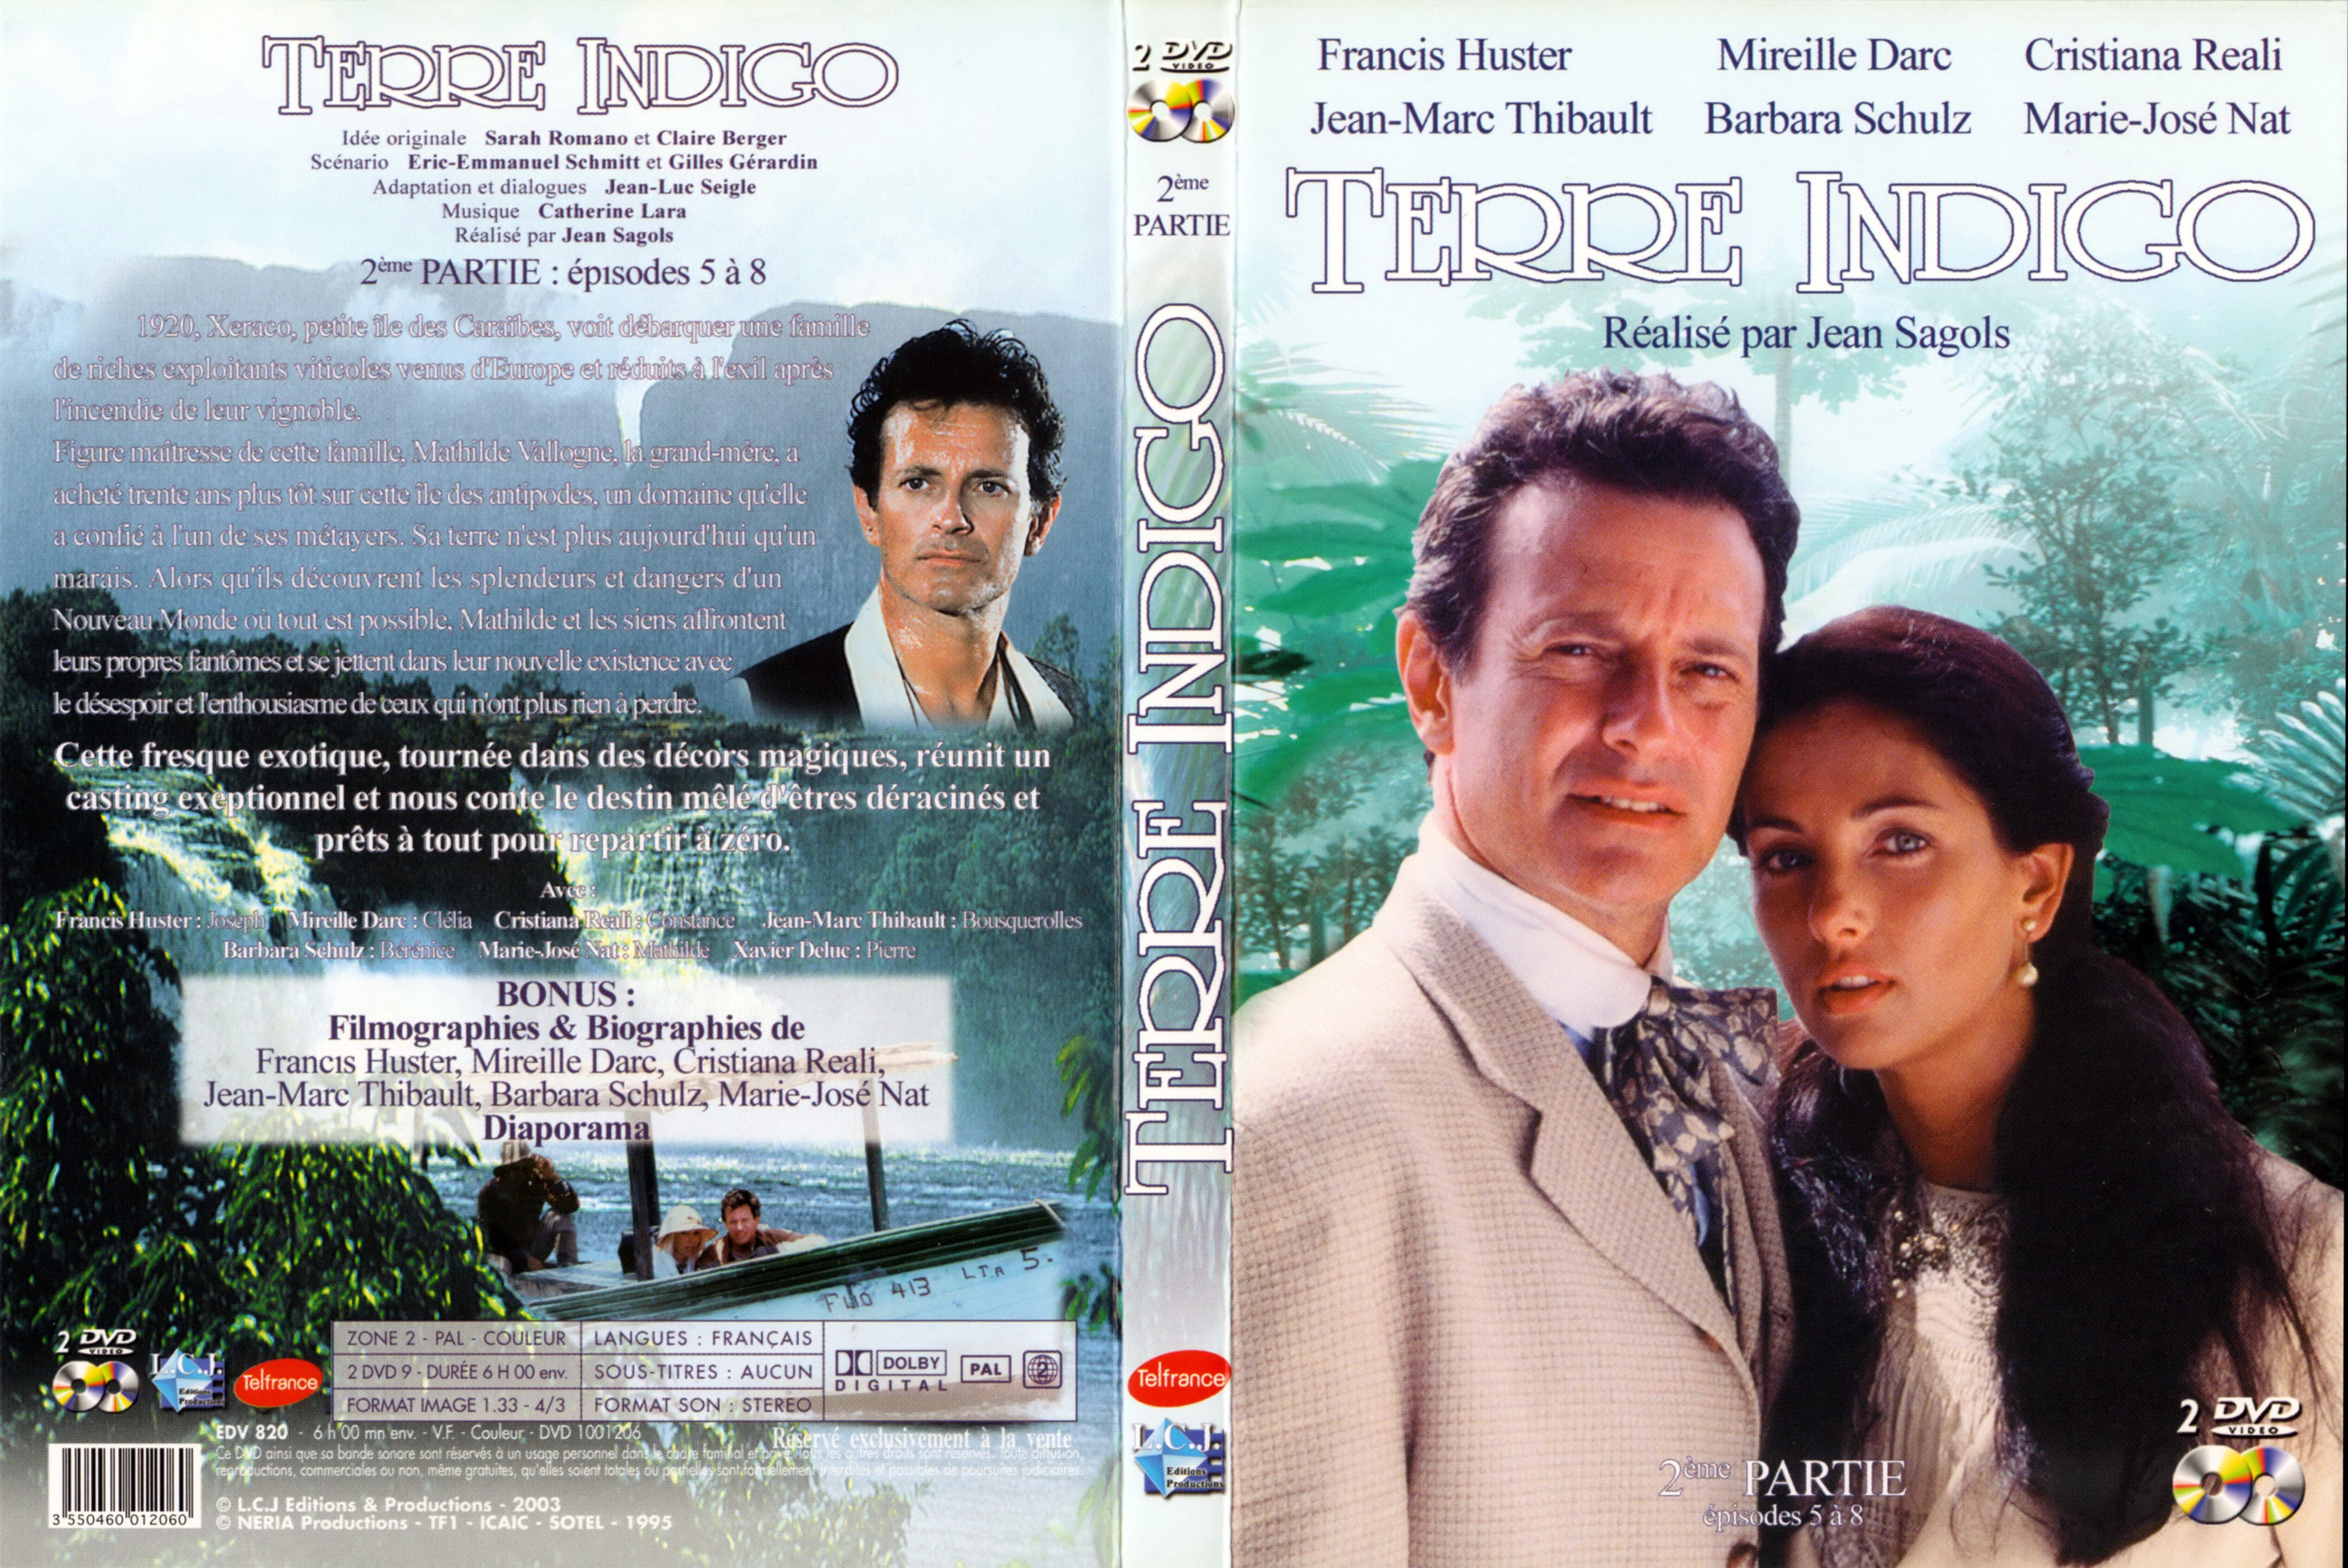 Jaquette DVD Terre indigo vol 2 v2